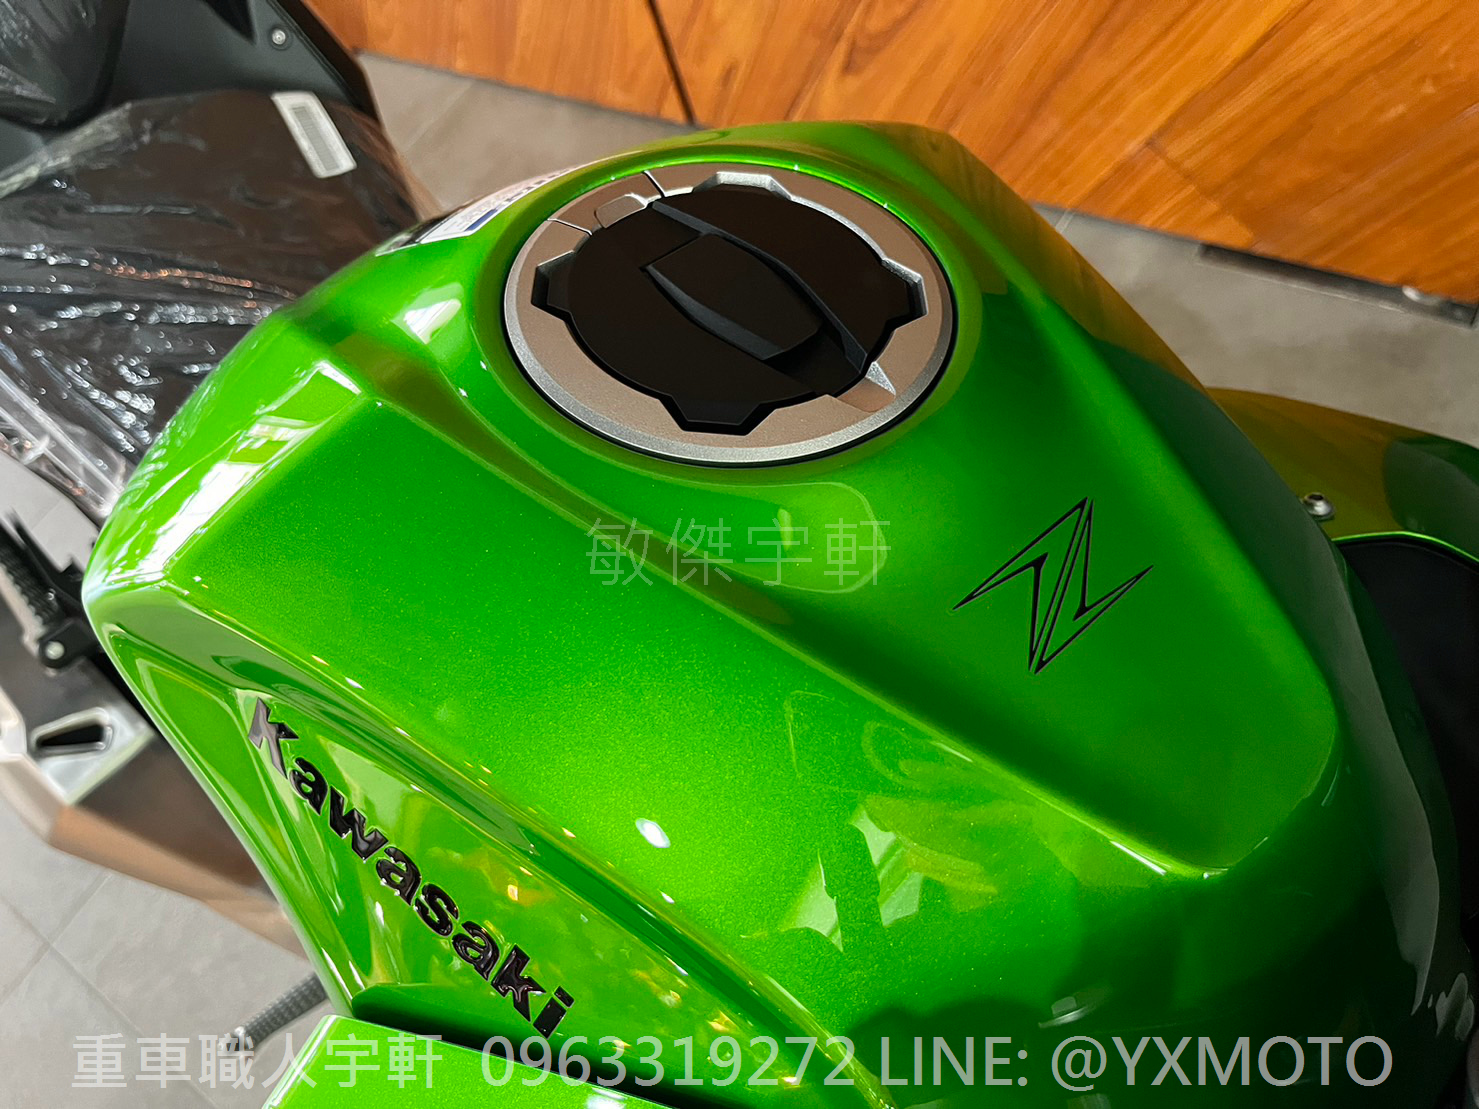 KAWASAKI Z400新車出售中 【敏傑宇軒】2023 KAWASAKI Z400 綠色 總代理公司車 零頭款零利率 | 重車銷售職人-宇軒 (敏傑)